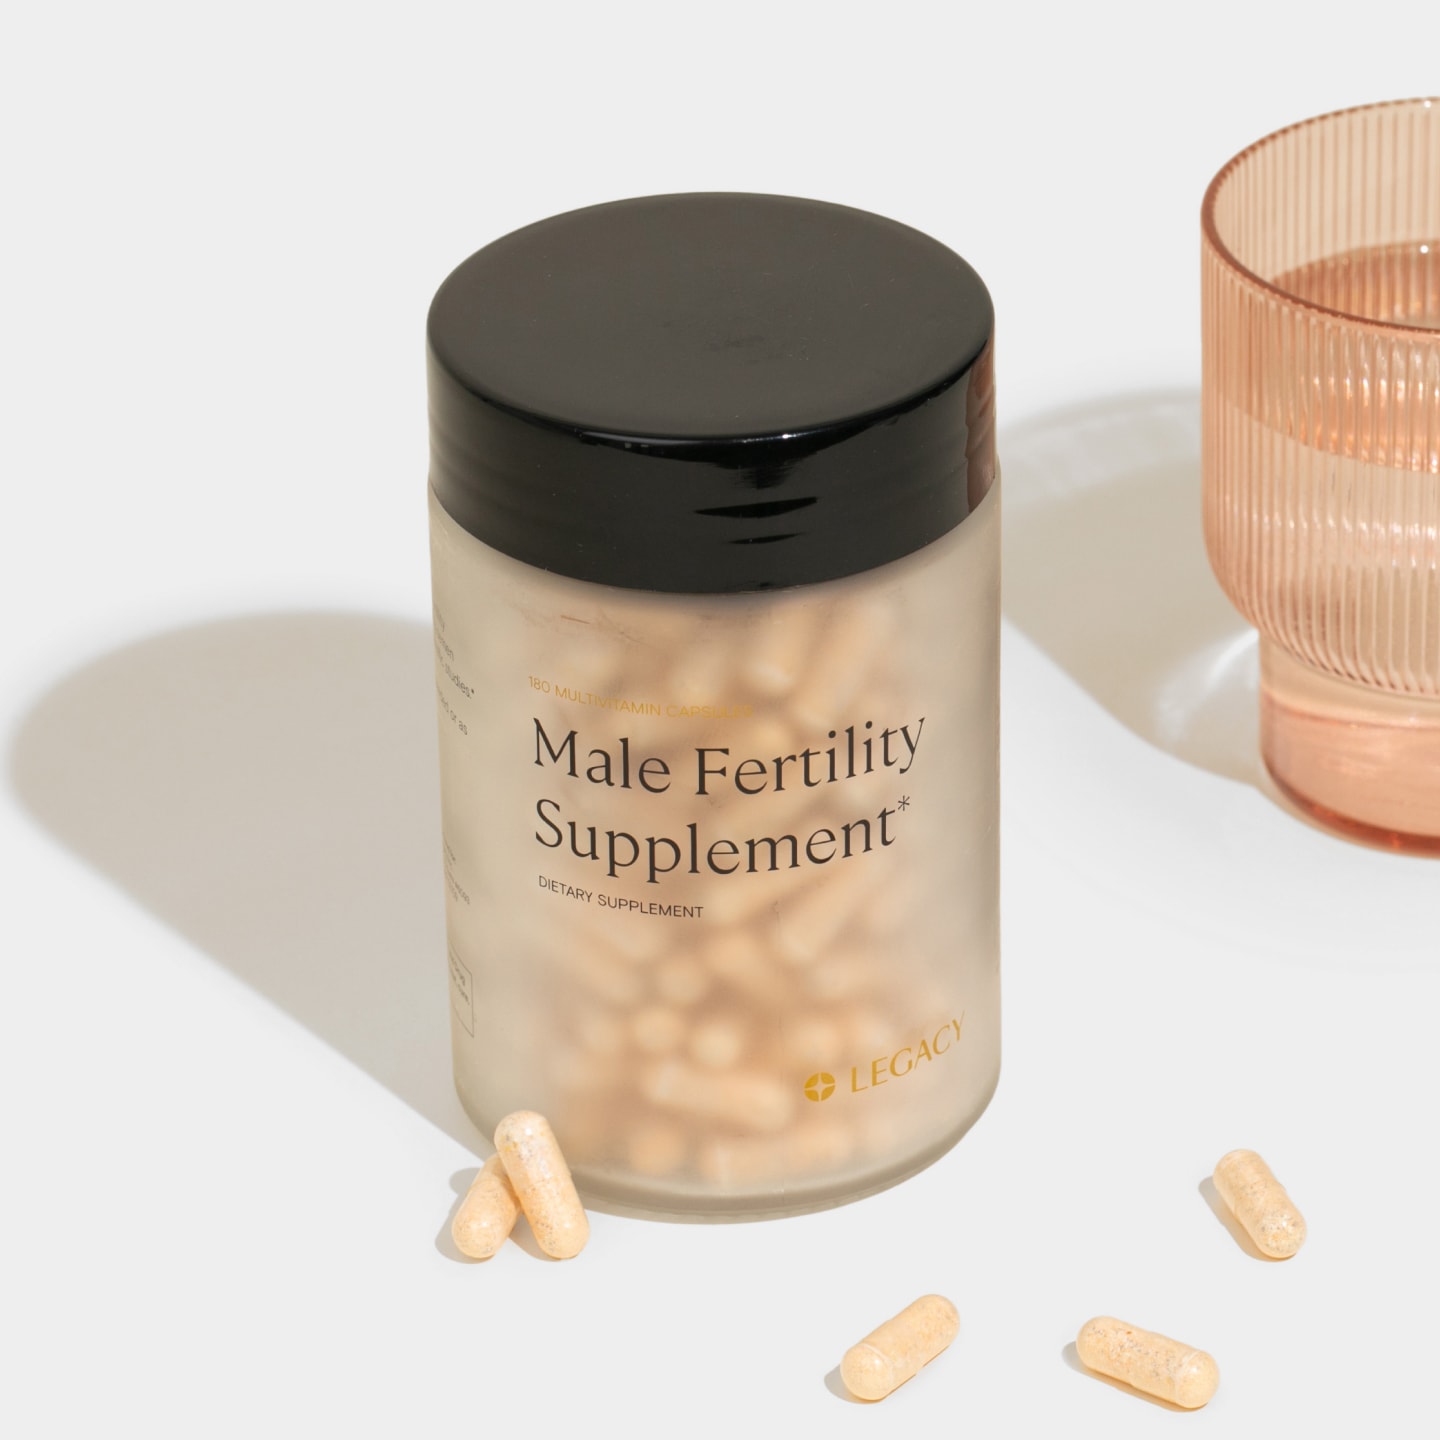 Male fertility supplement